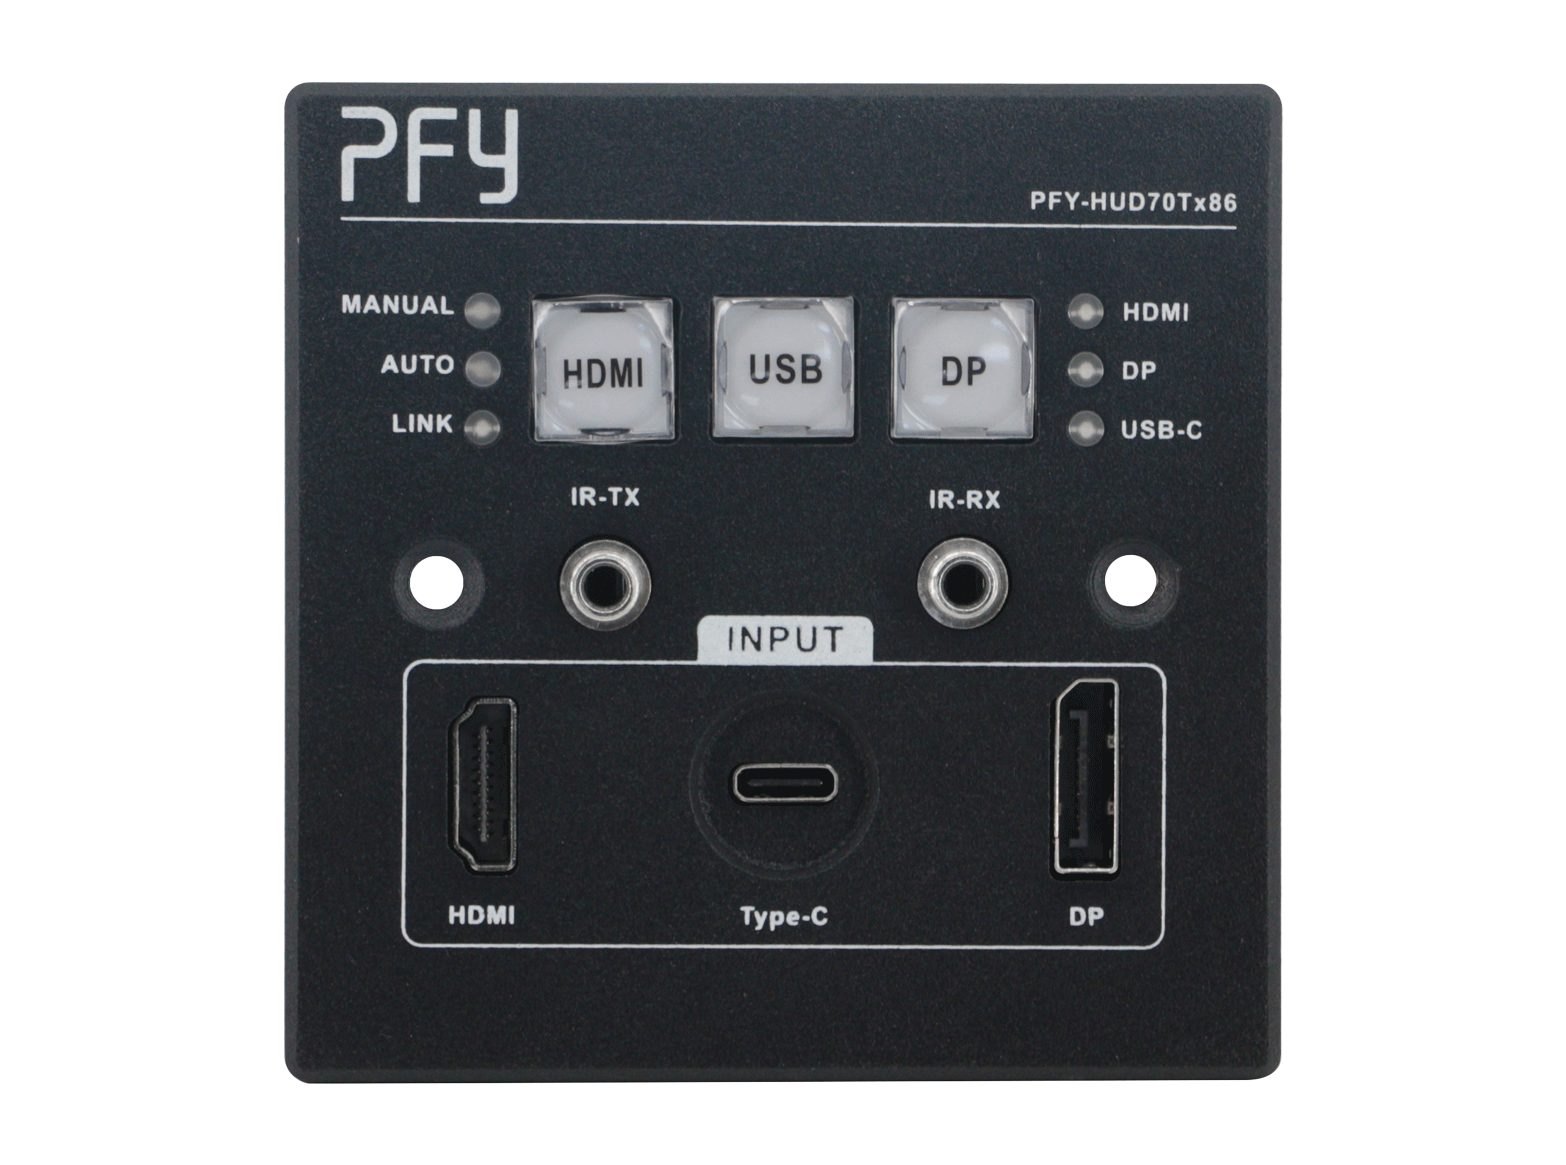 HDBaseT Transmitter - PFY-HUD70Tx86